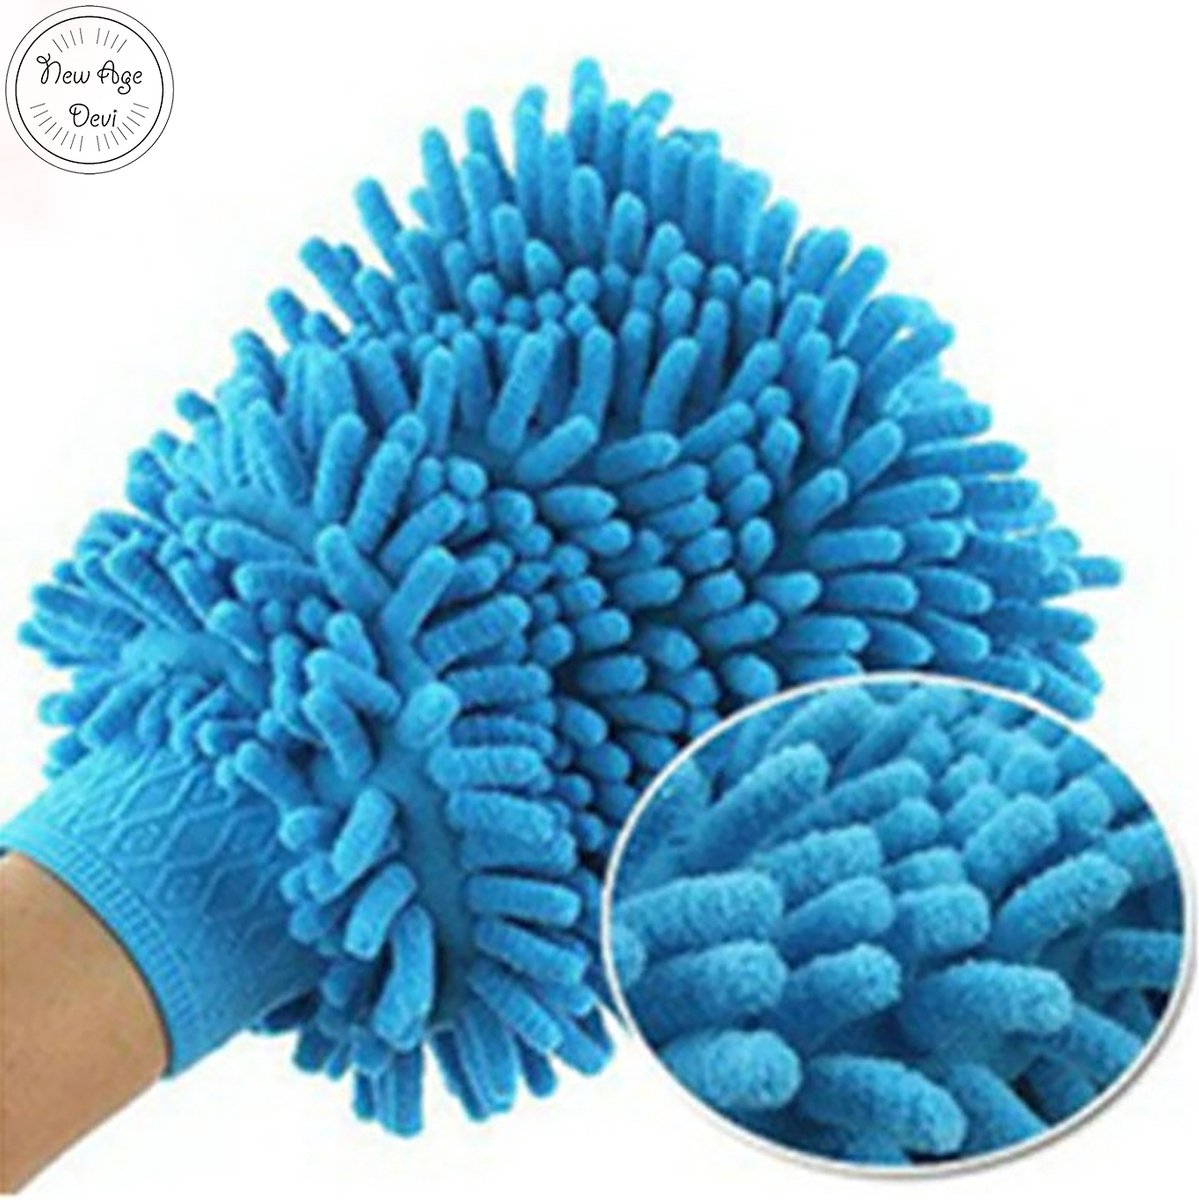 New Age Devi Washandschoen Microvezel washand Autowashandschoen Blauw Microfiber glove